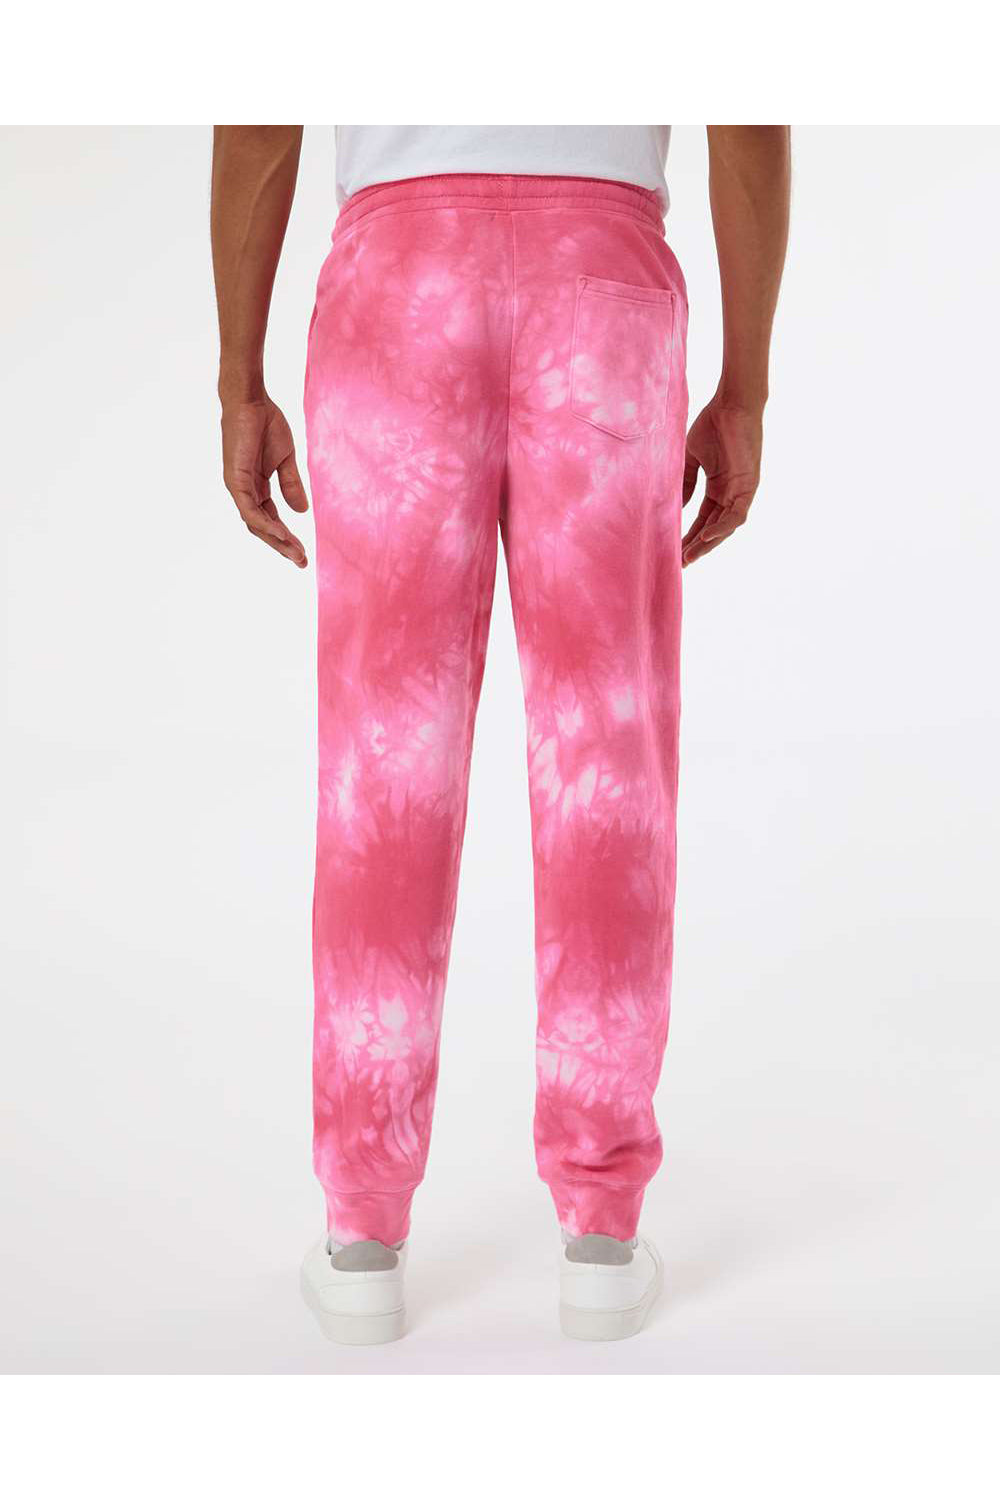 Independent Trading Co. PRM50PTTD Mens Tie-Dye Fleece Sweatpants w/ Pockets Pink Model Back